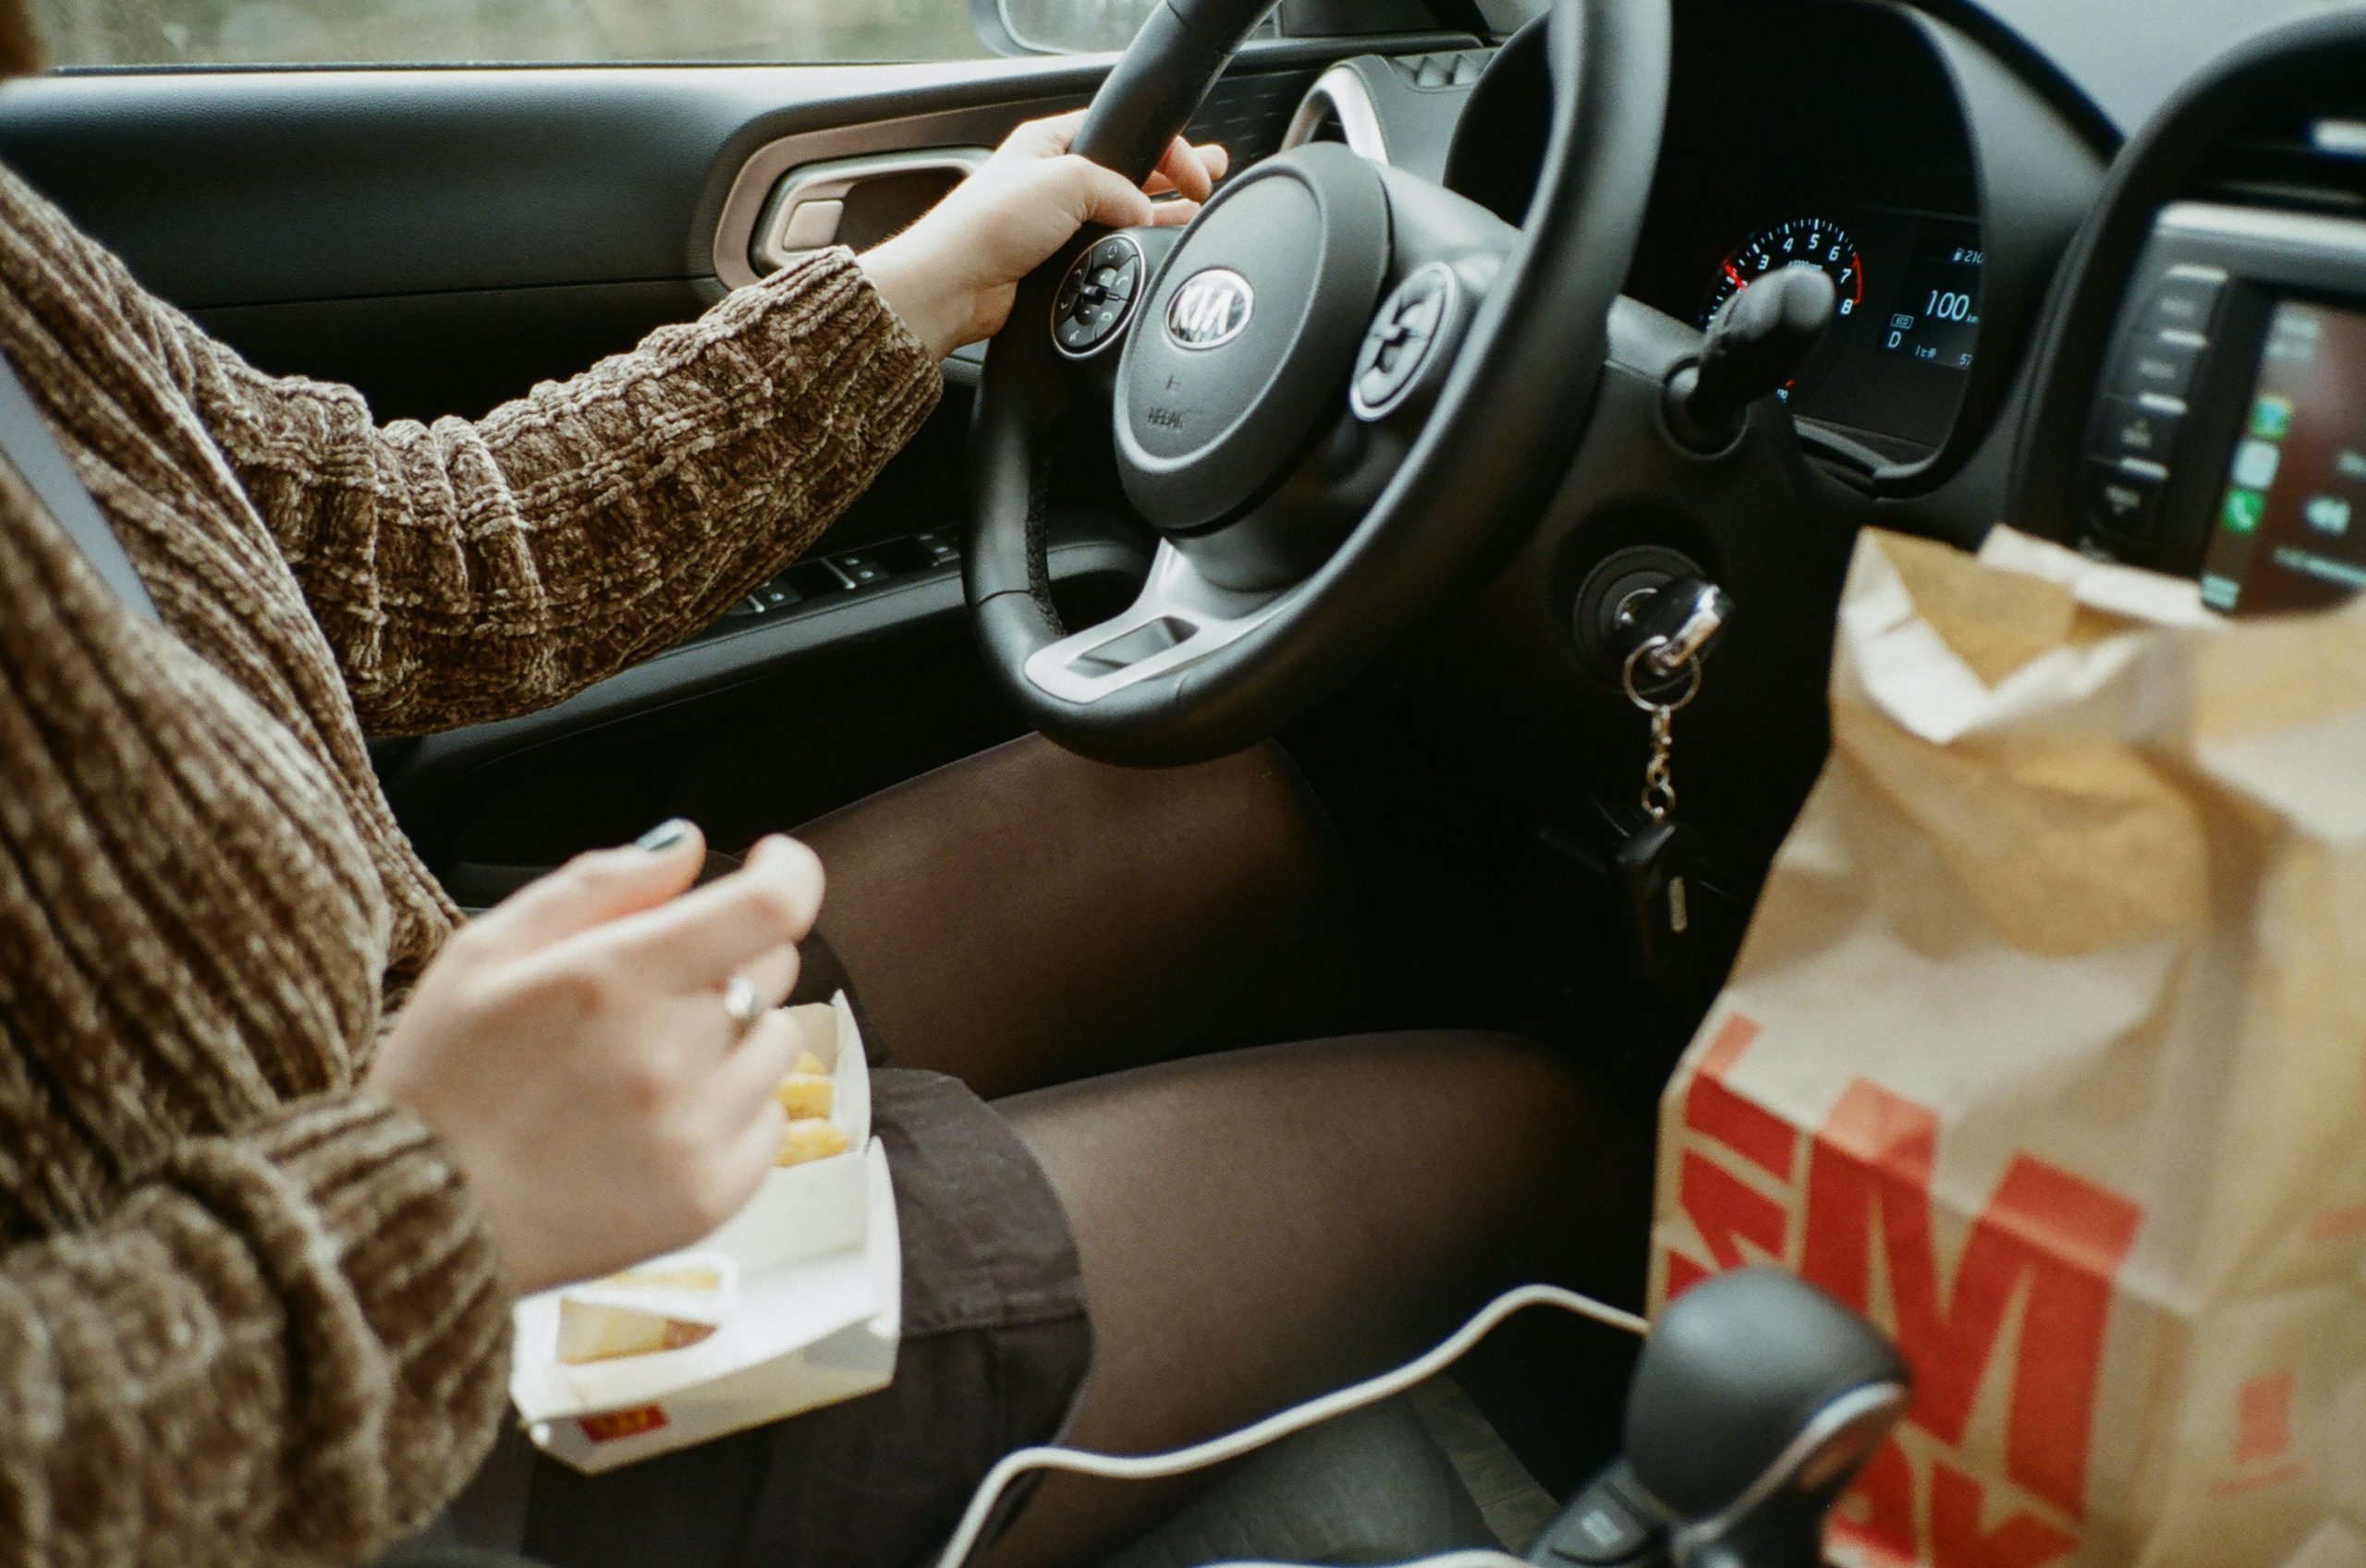 Food smells in car 